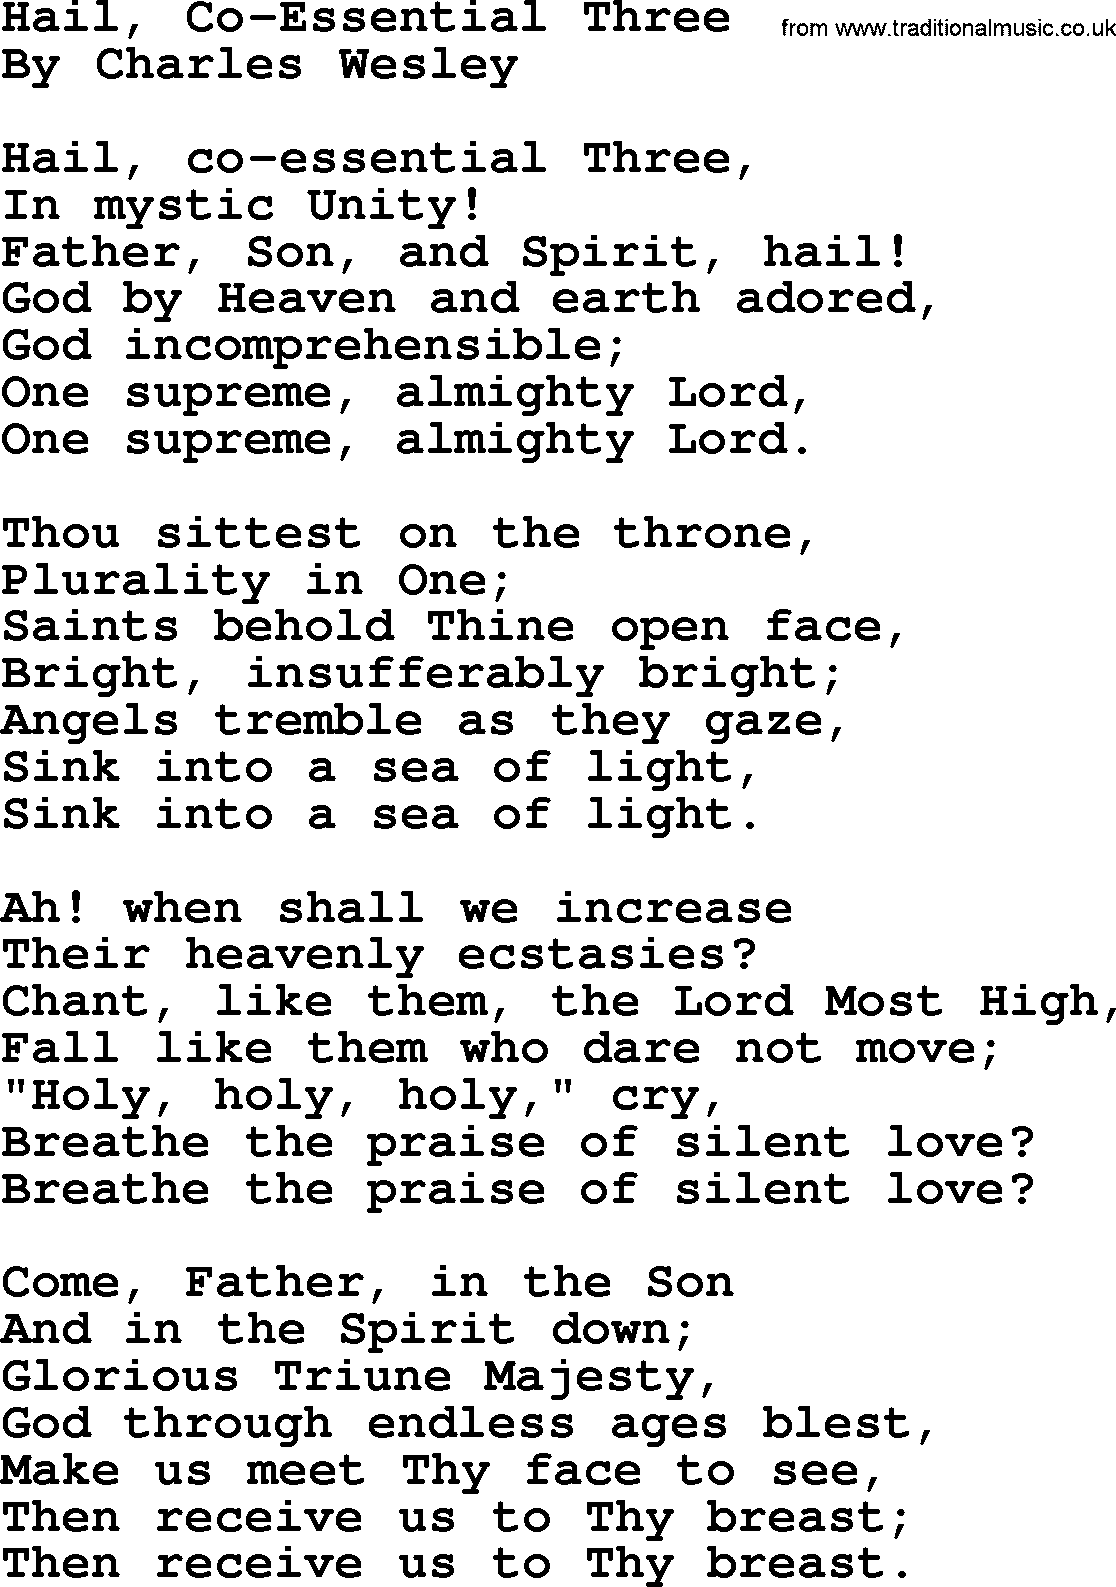 Charles Wesley hymn: Hail, Co-essential Three, lyrics